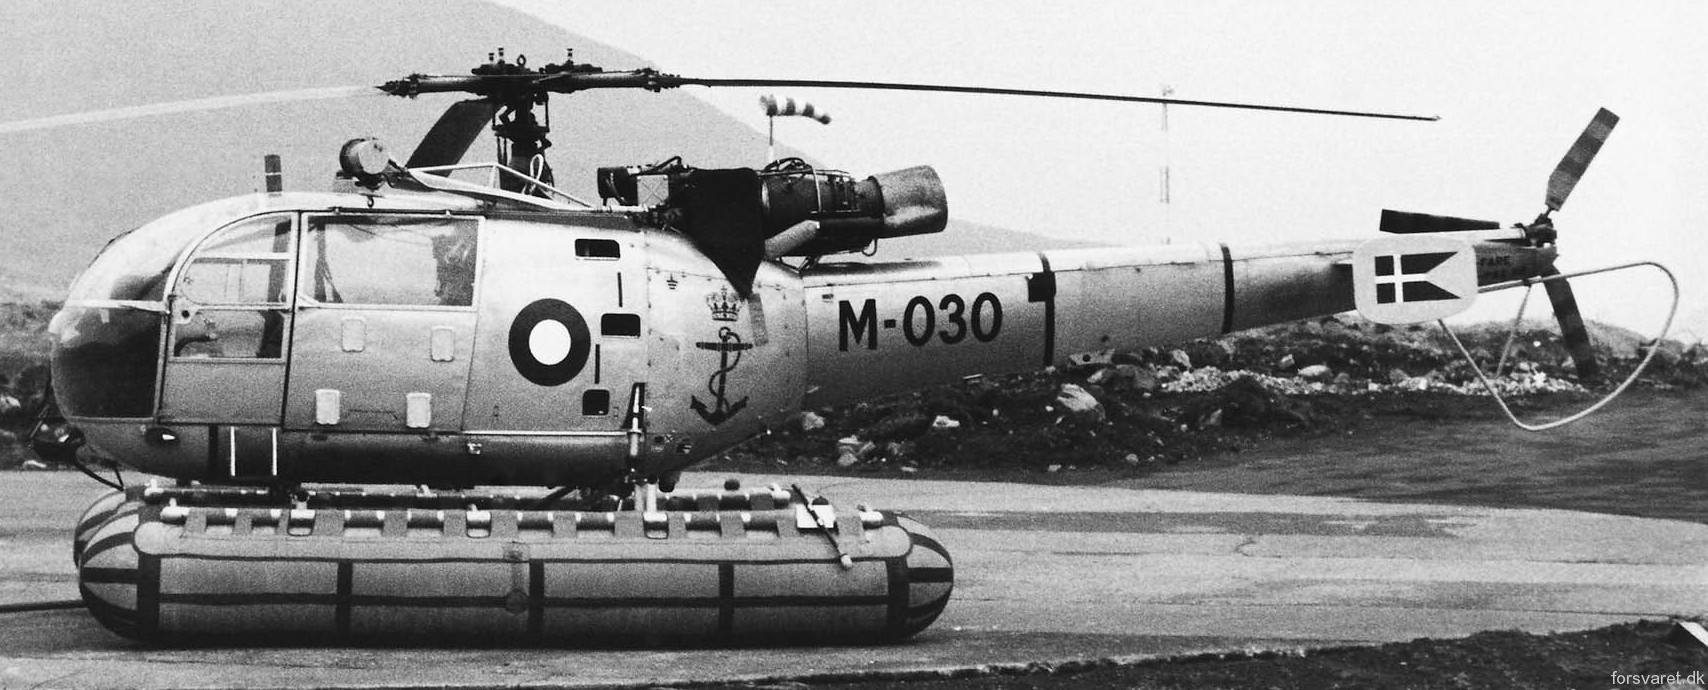 sa 316b alouette iii helicopter royal danish navy søværnet kongelige danske marine sud aviation m-030 09